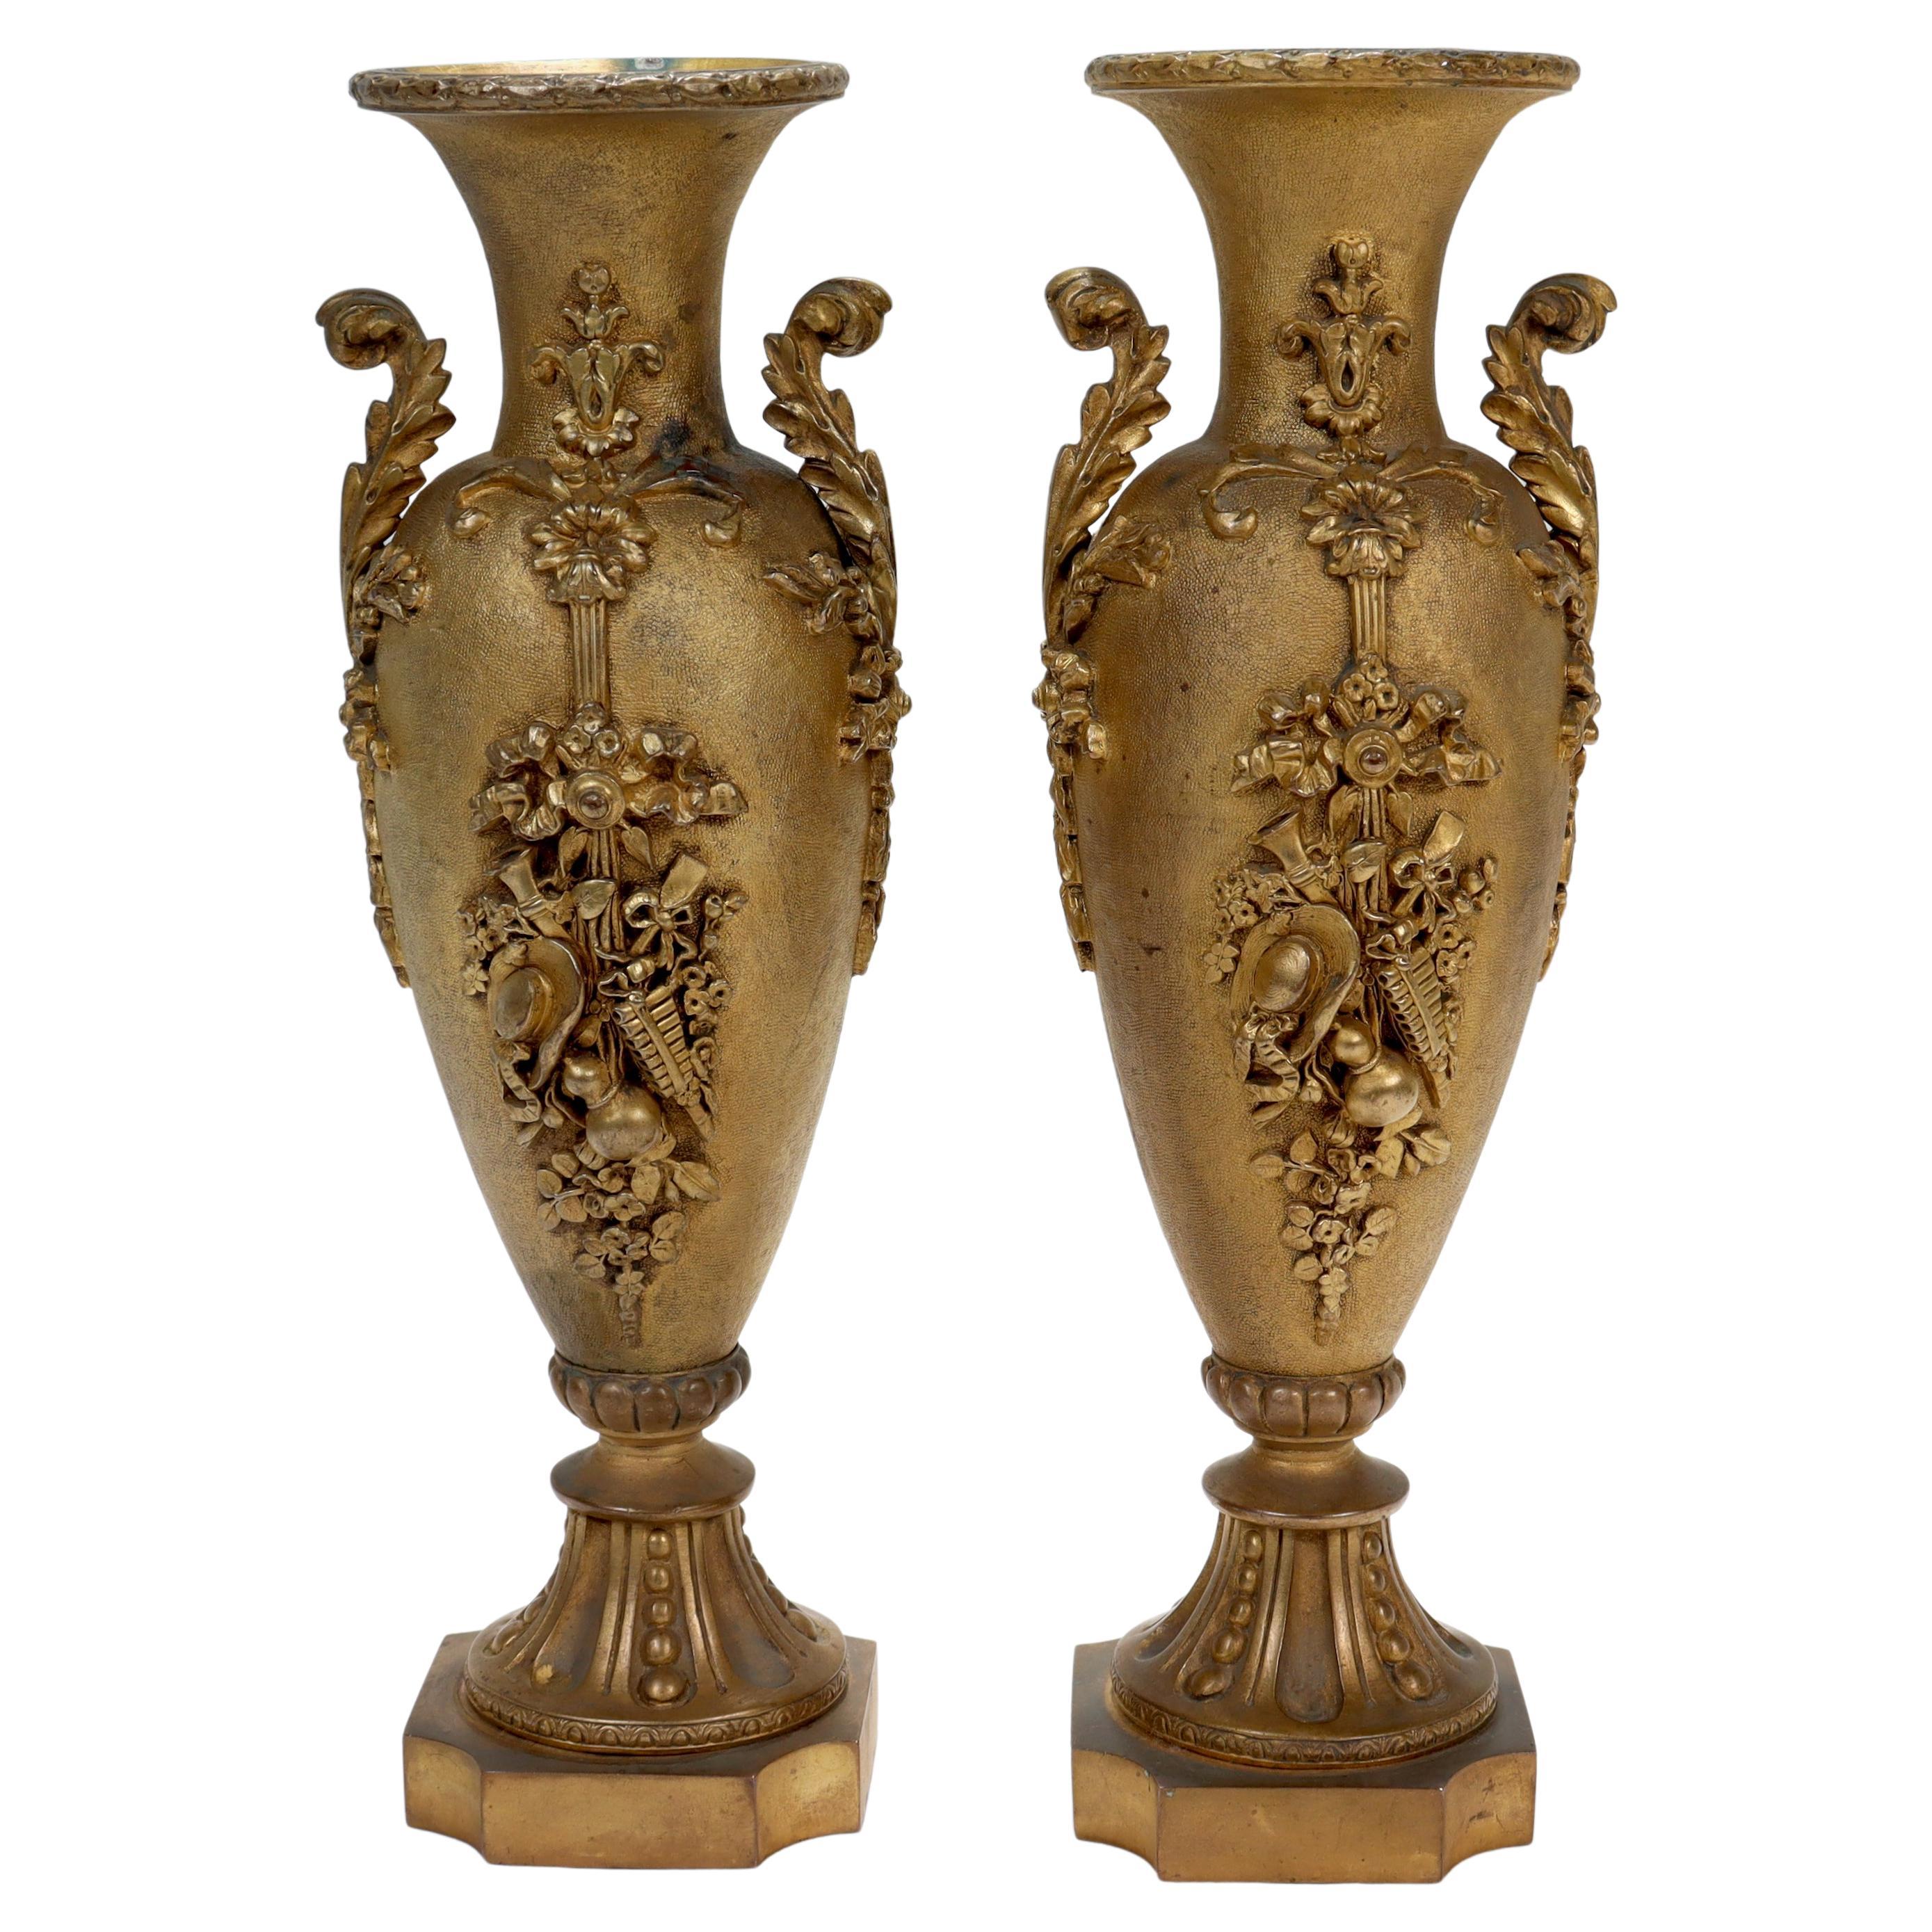 Antique Second Empire French Doré Gilt Bronze Vases or Urns For Sale